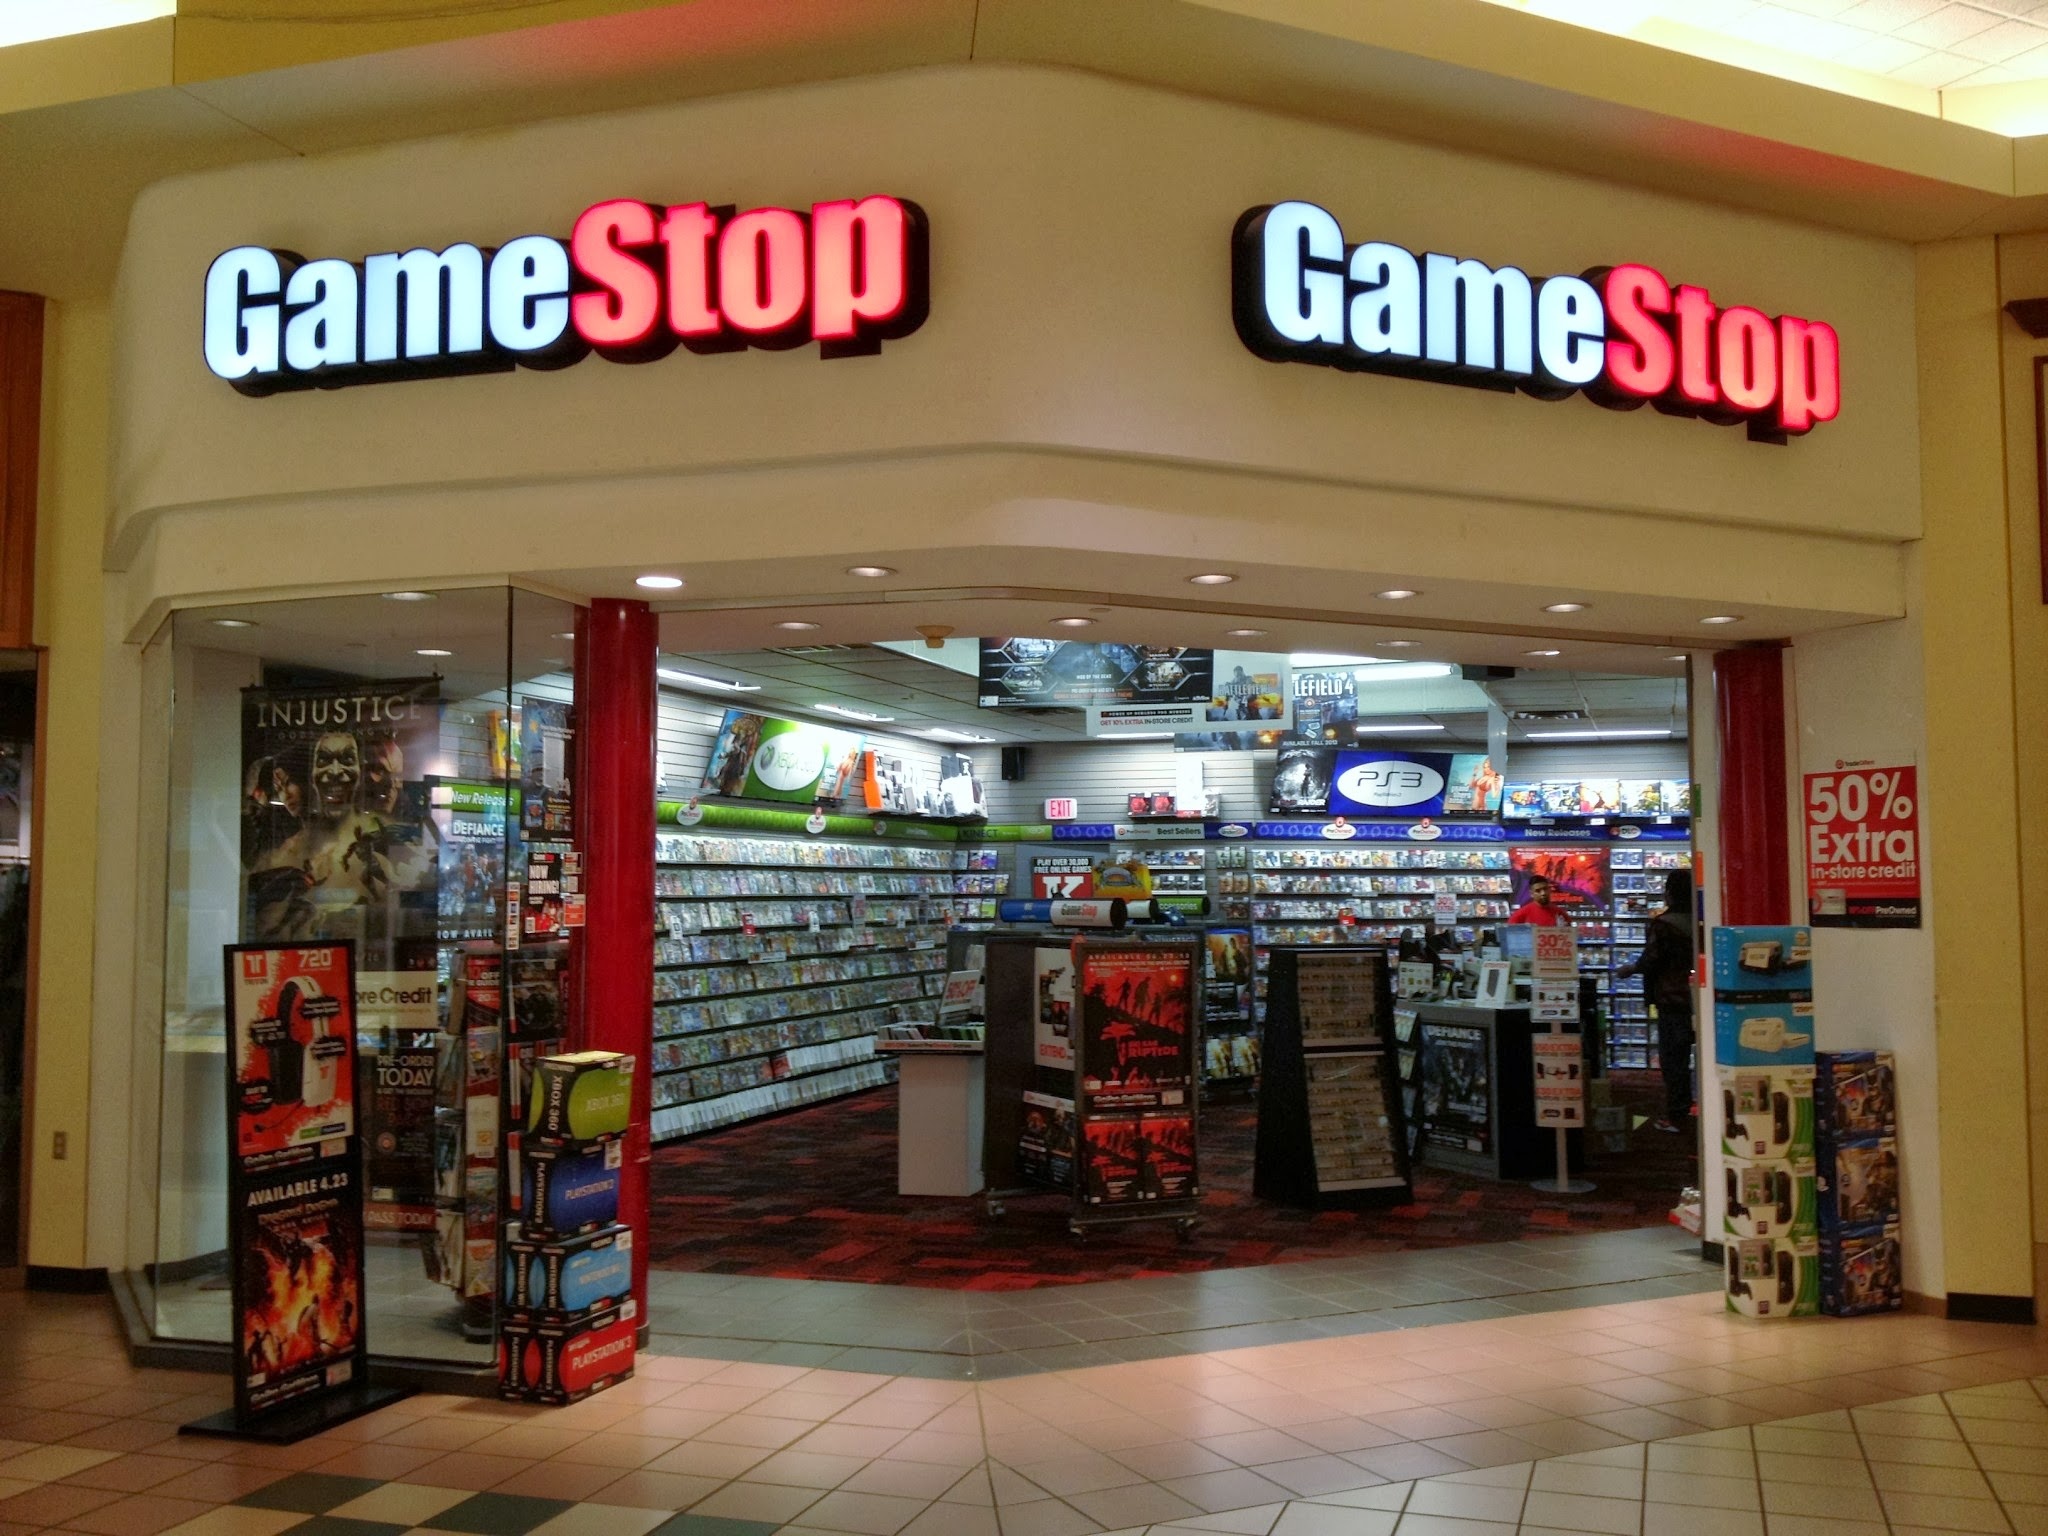 Games play shop